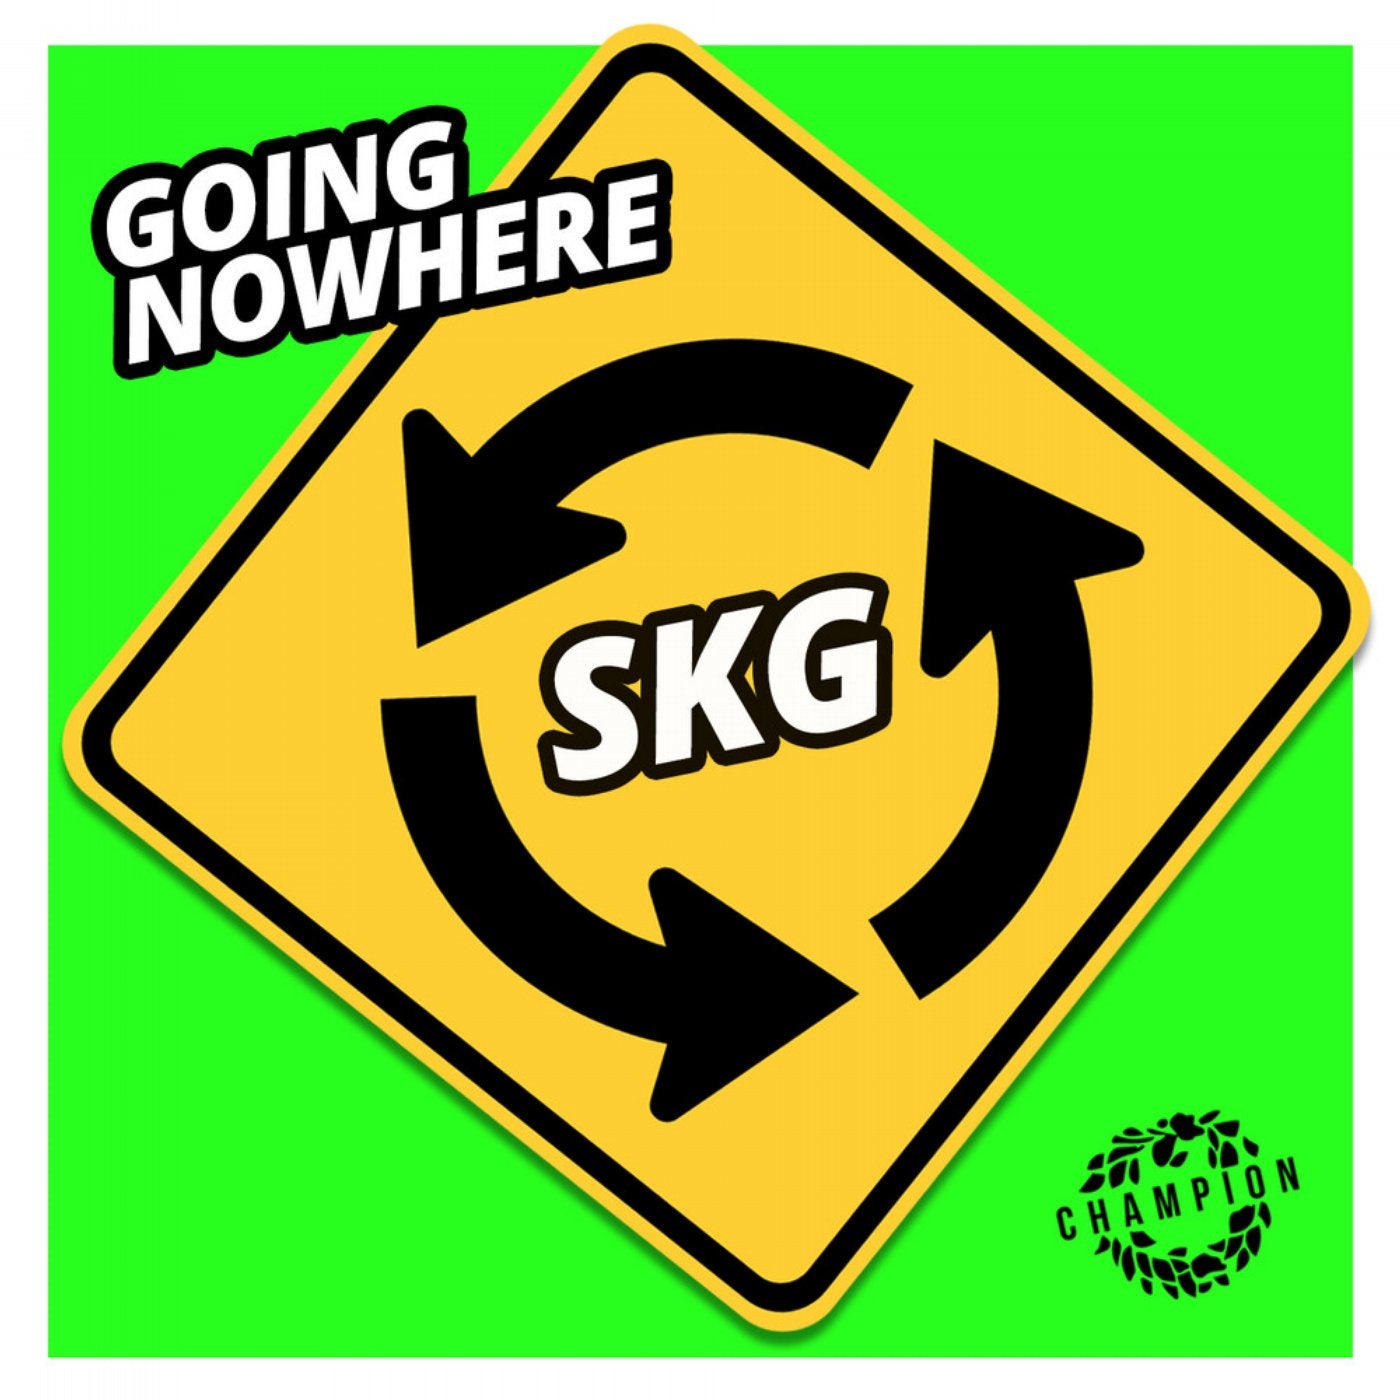 Now here you go. Go Nowhere. Going Nowhere. SKG records. SKG records злой.